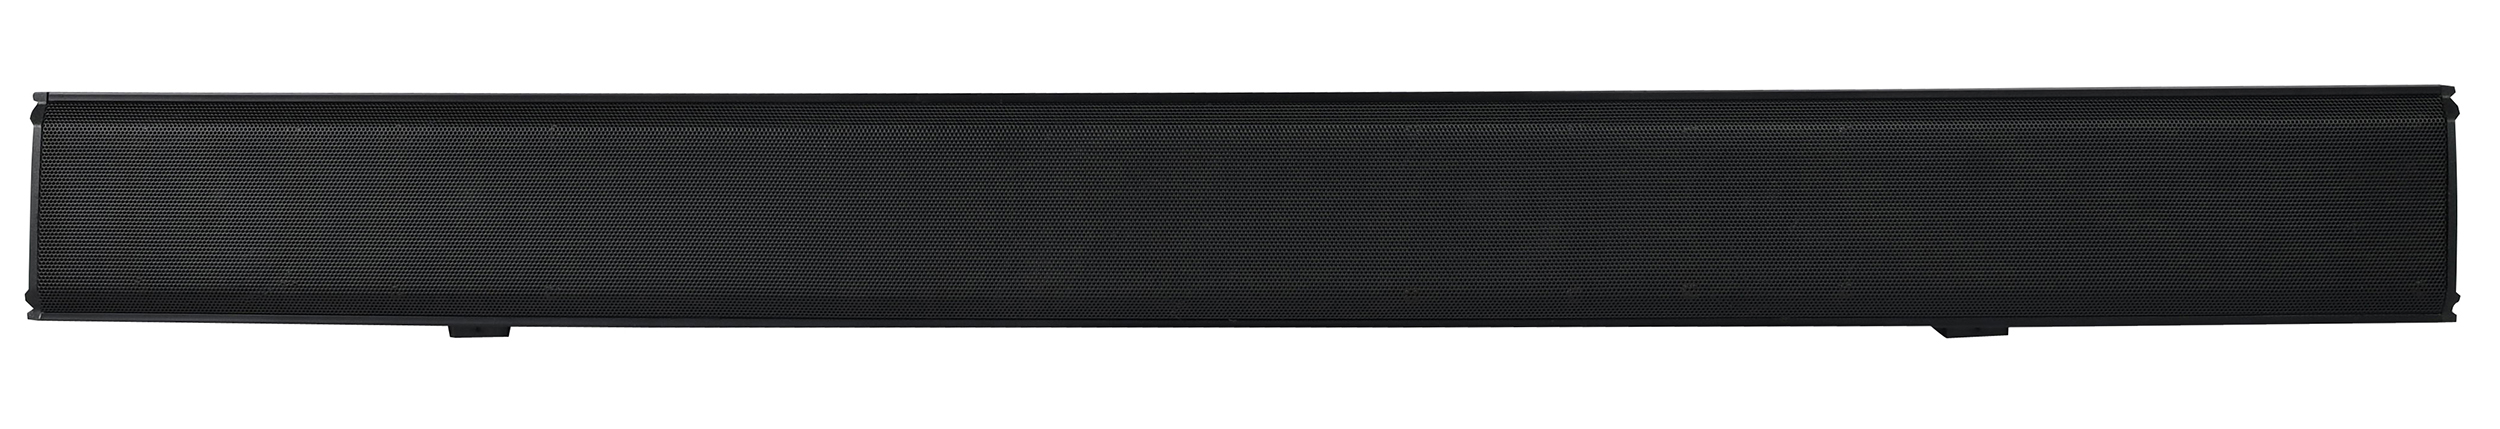 SBO680, 2.1 soundbar, 80cm 80w + Built-in Subwoofer, noir